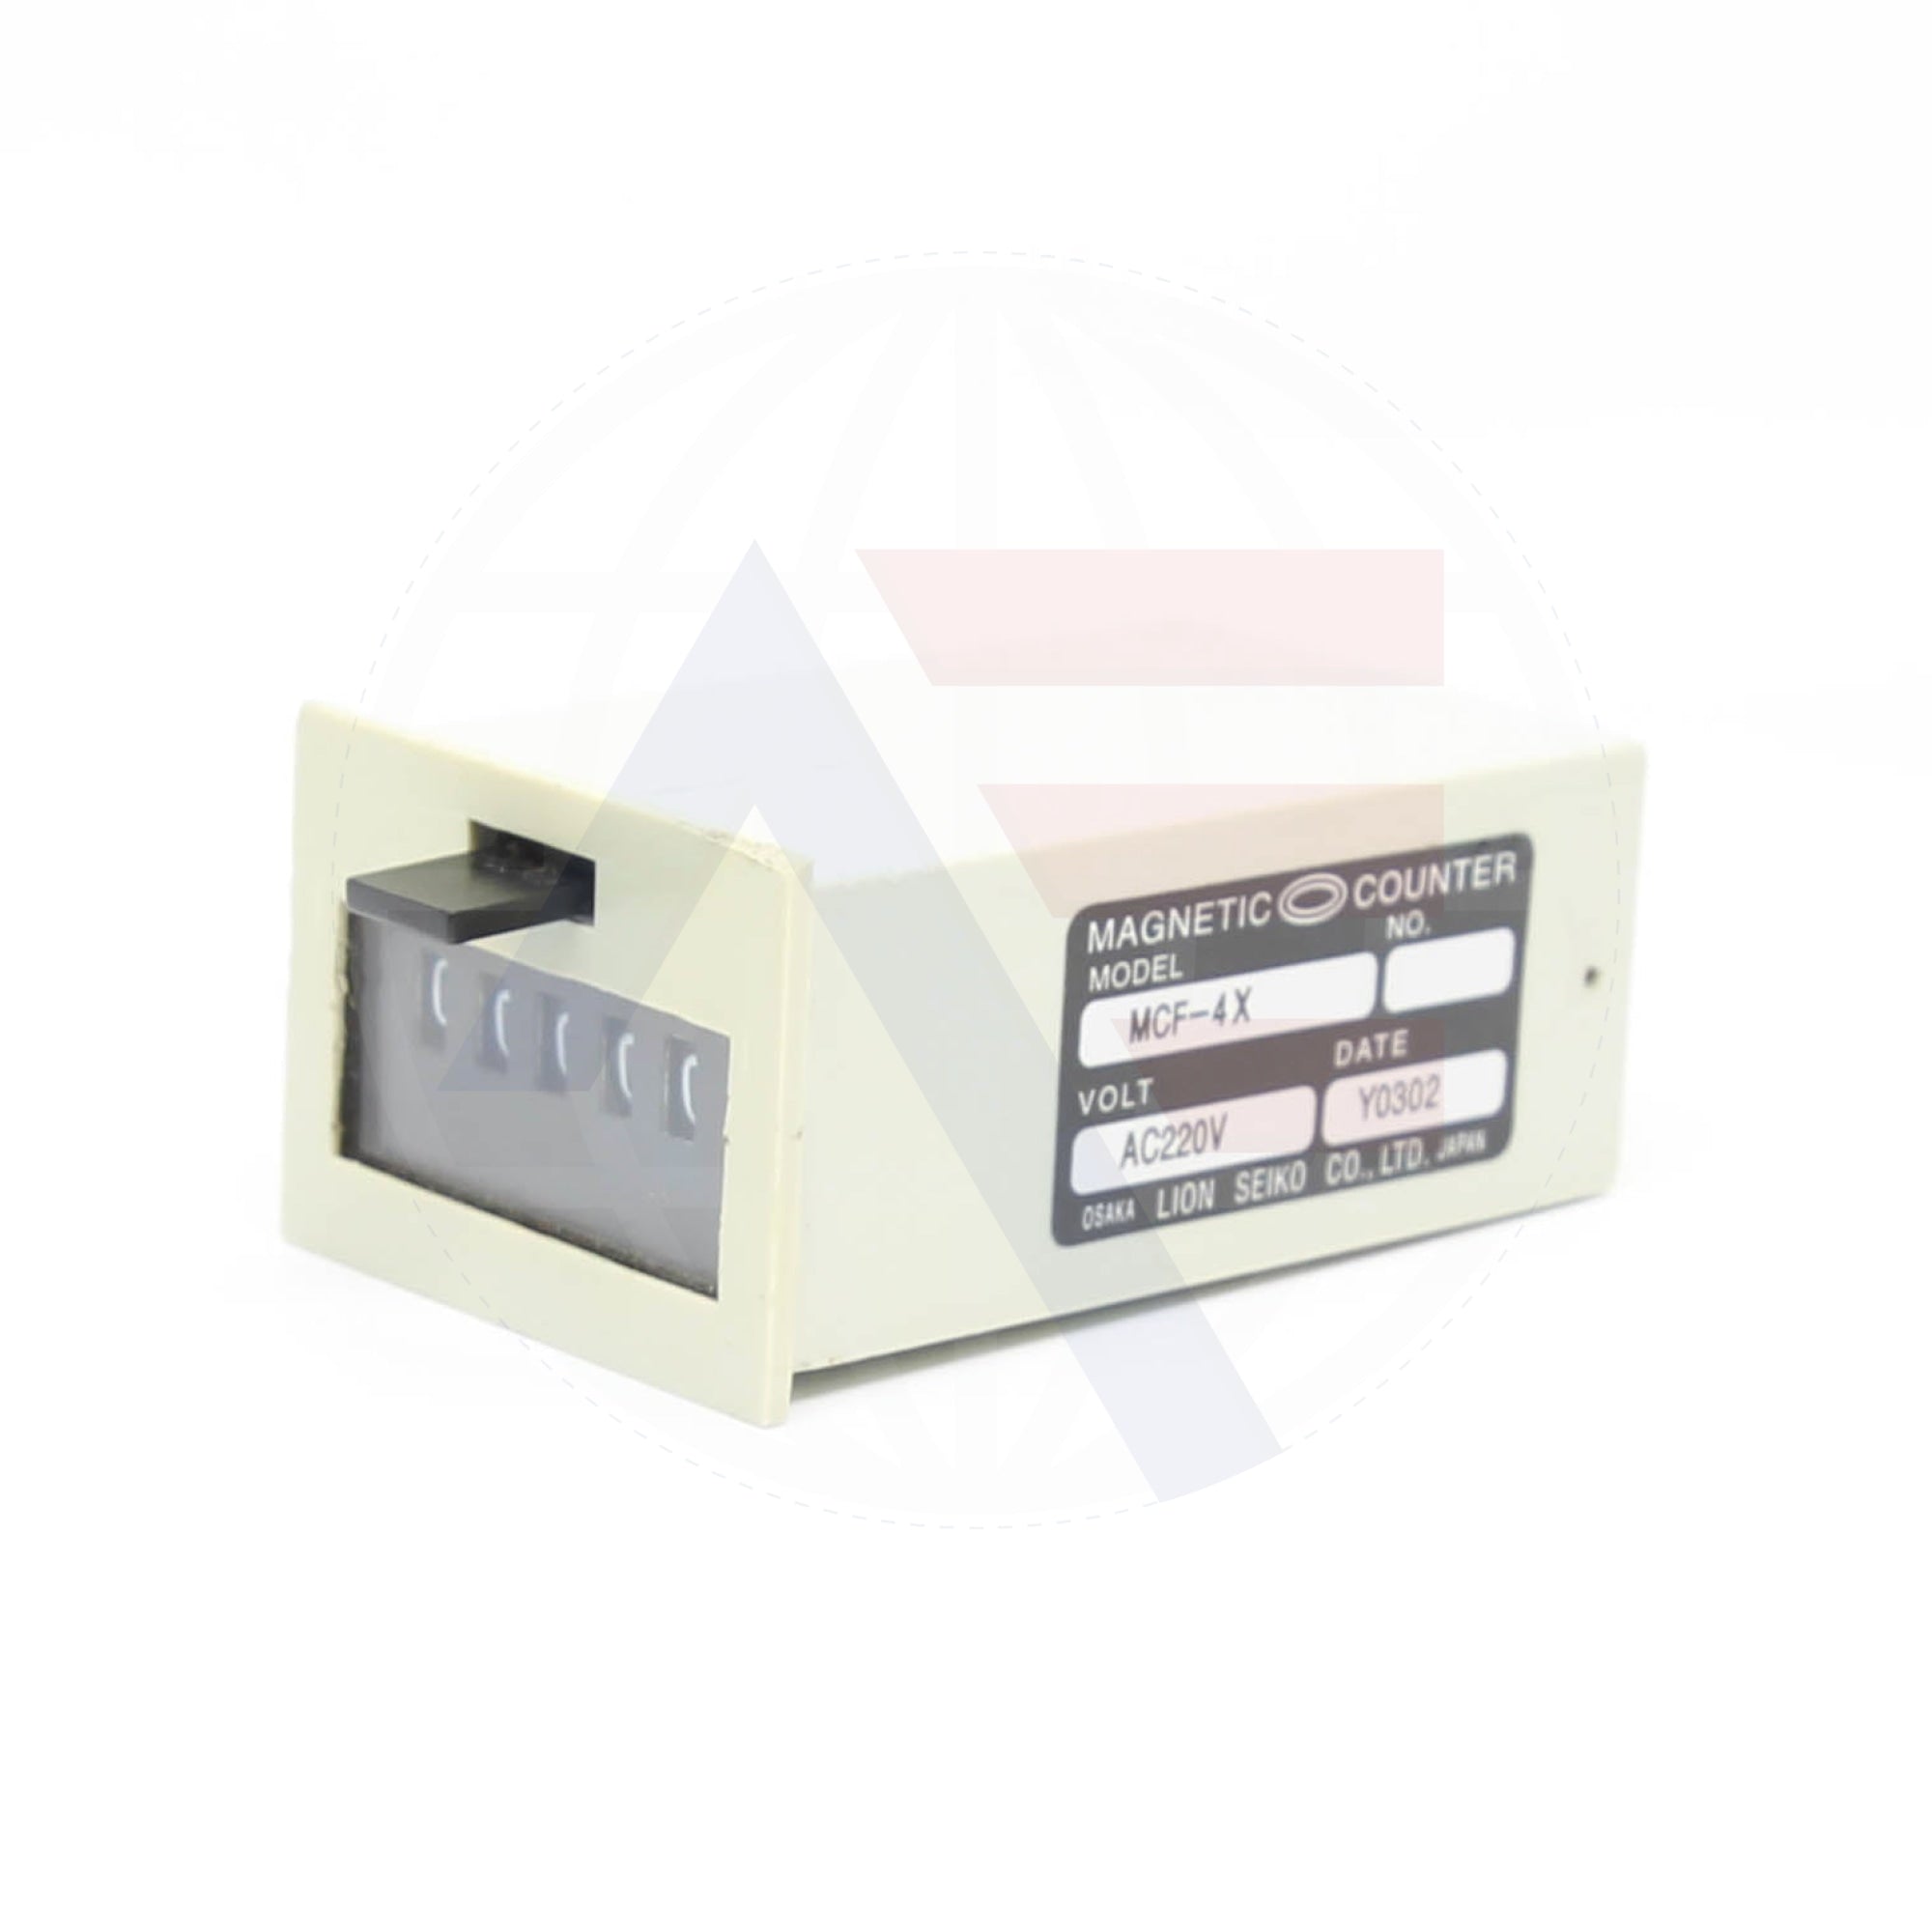 Seiko 2635 Magnetic Counter Mcf-4X